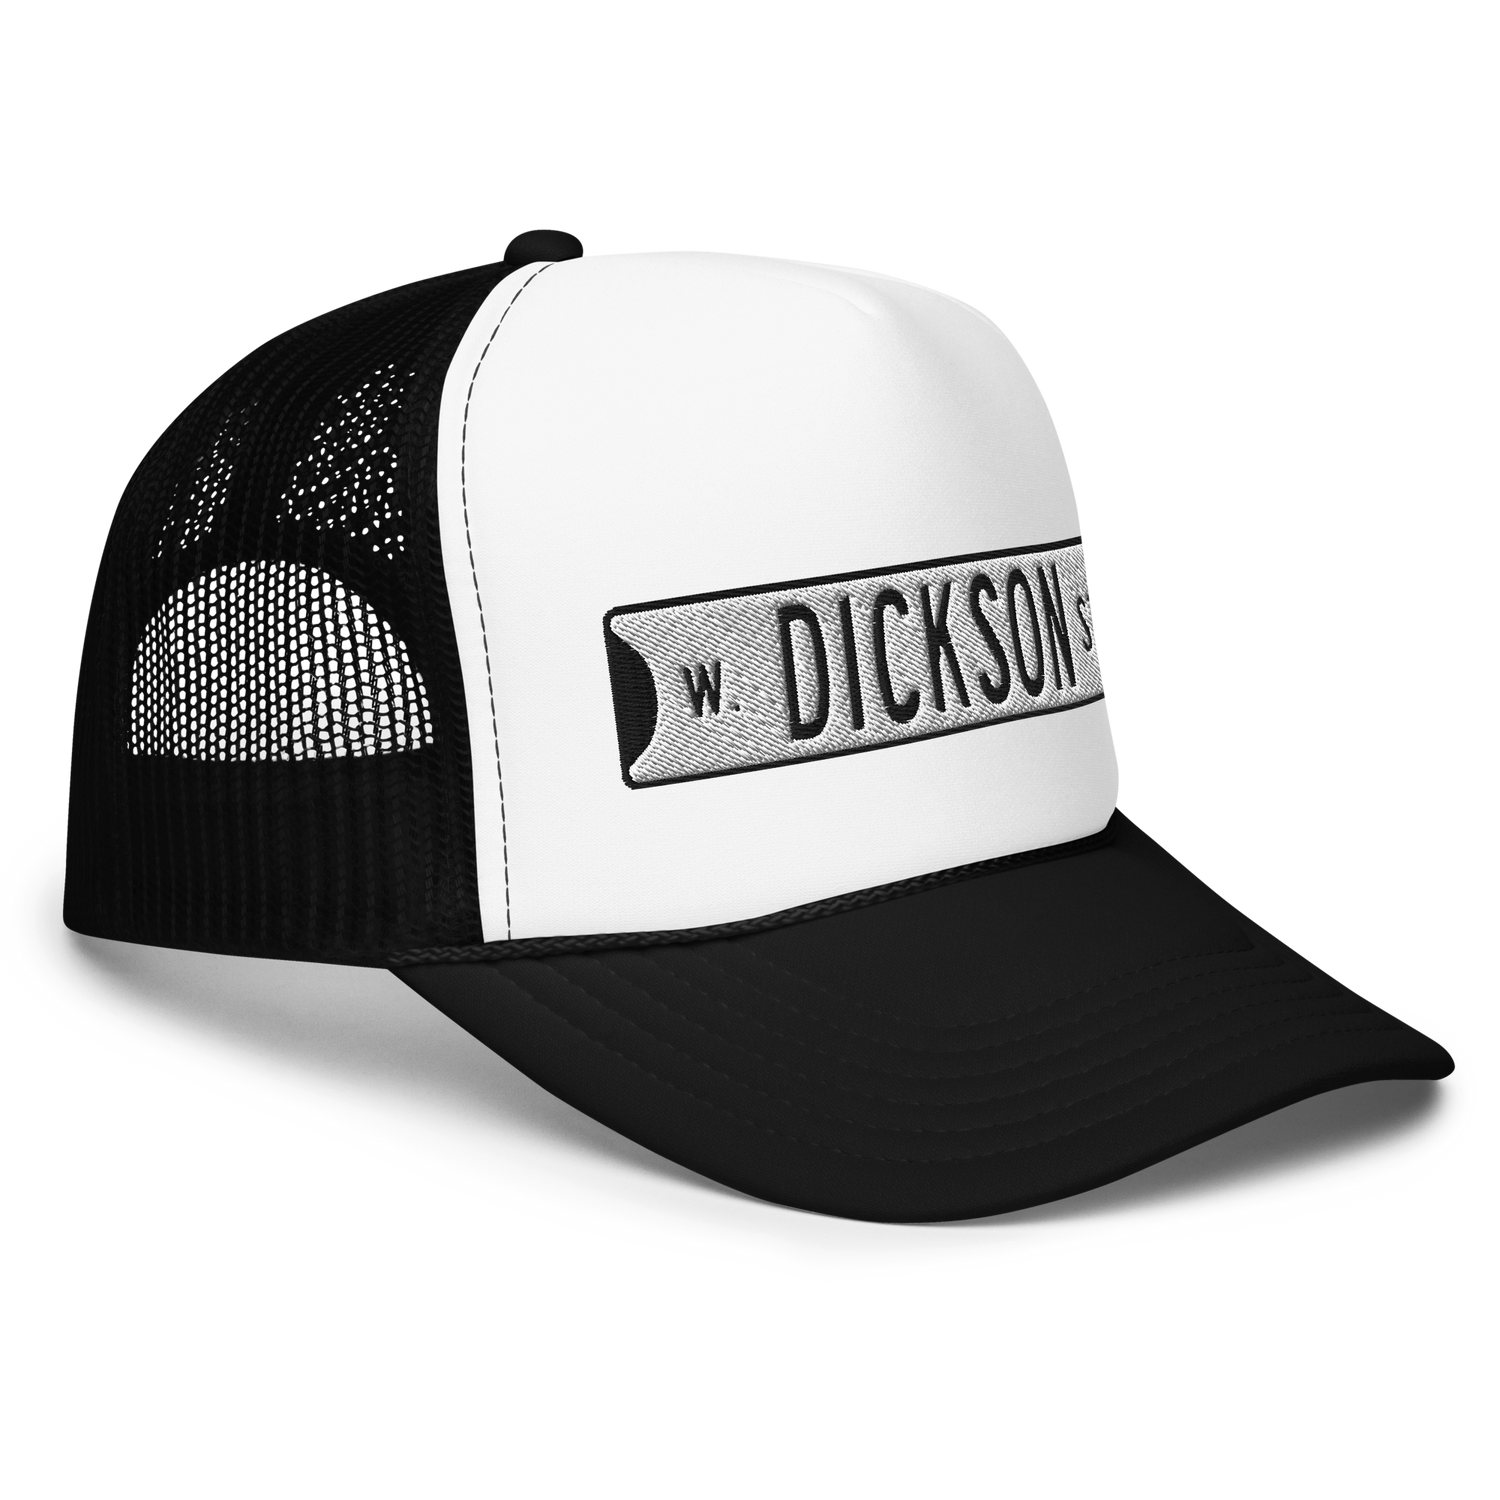 Retro Dickson Street Sign Foam Trucker Hat